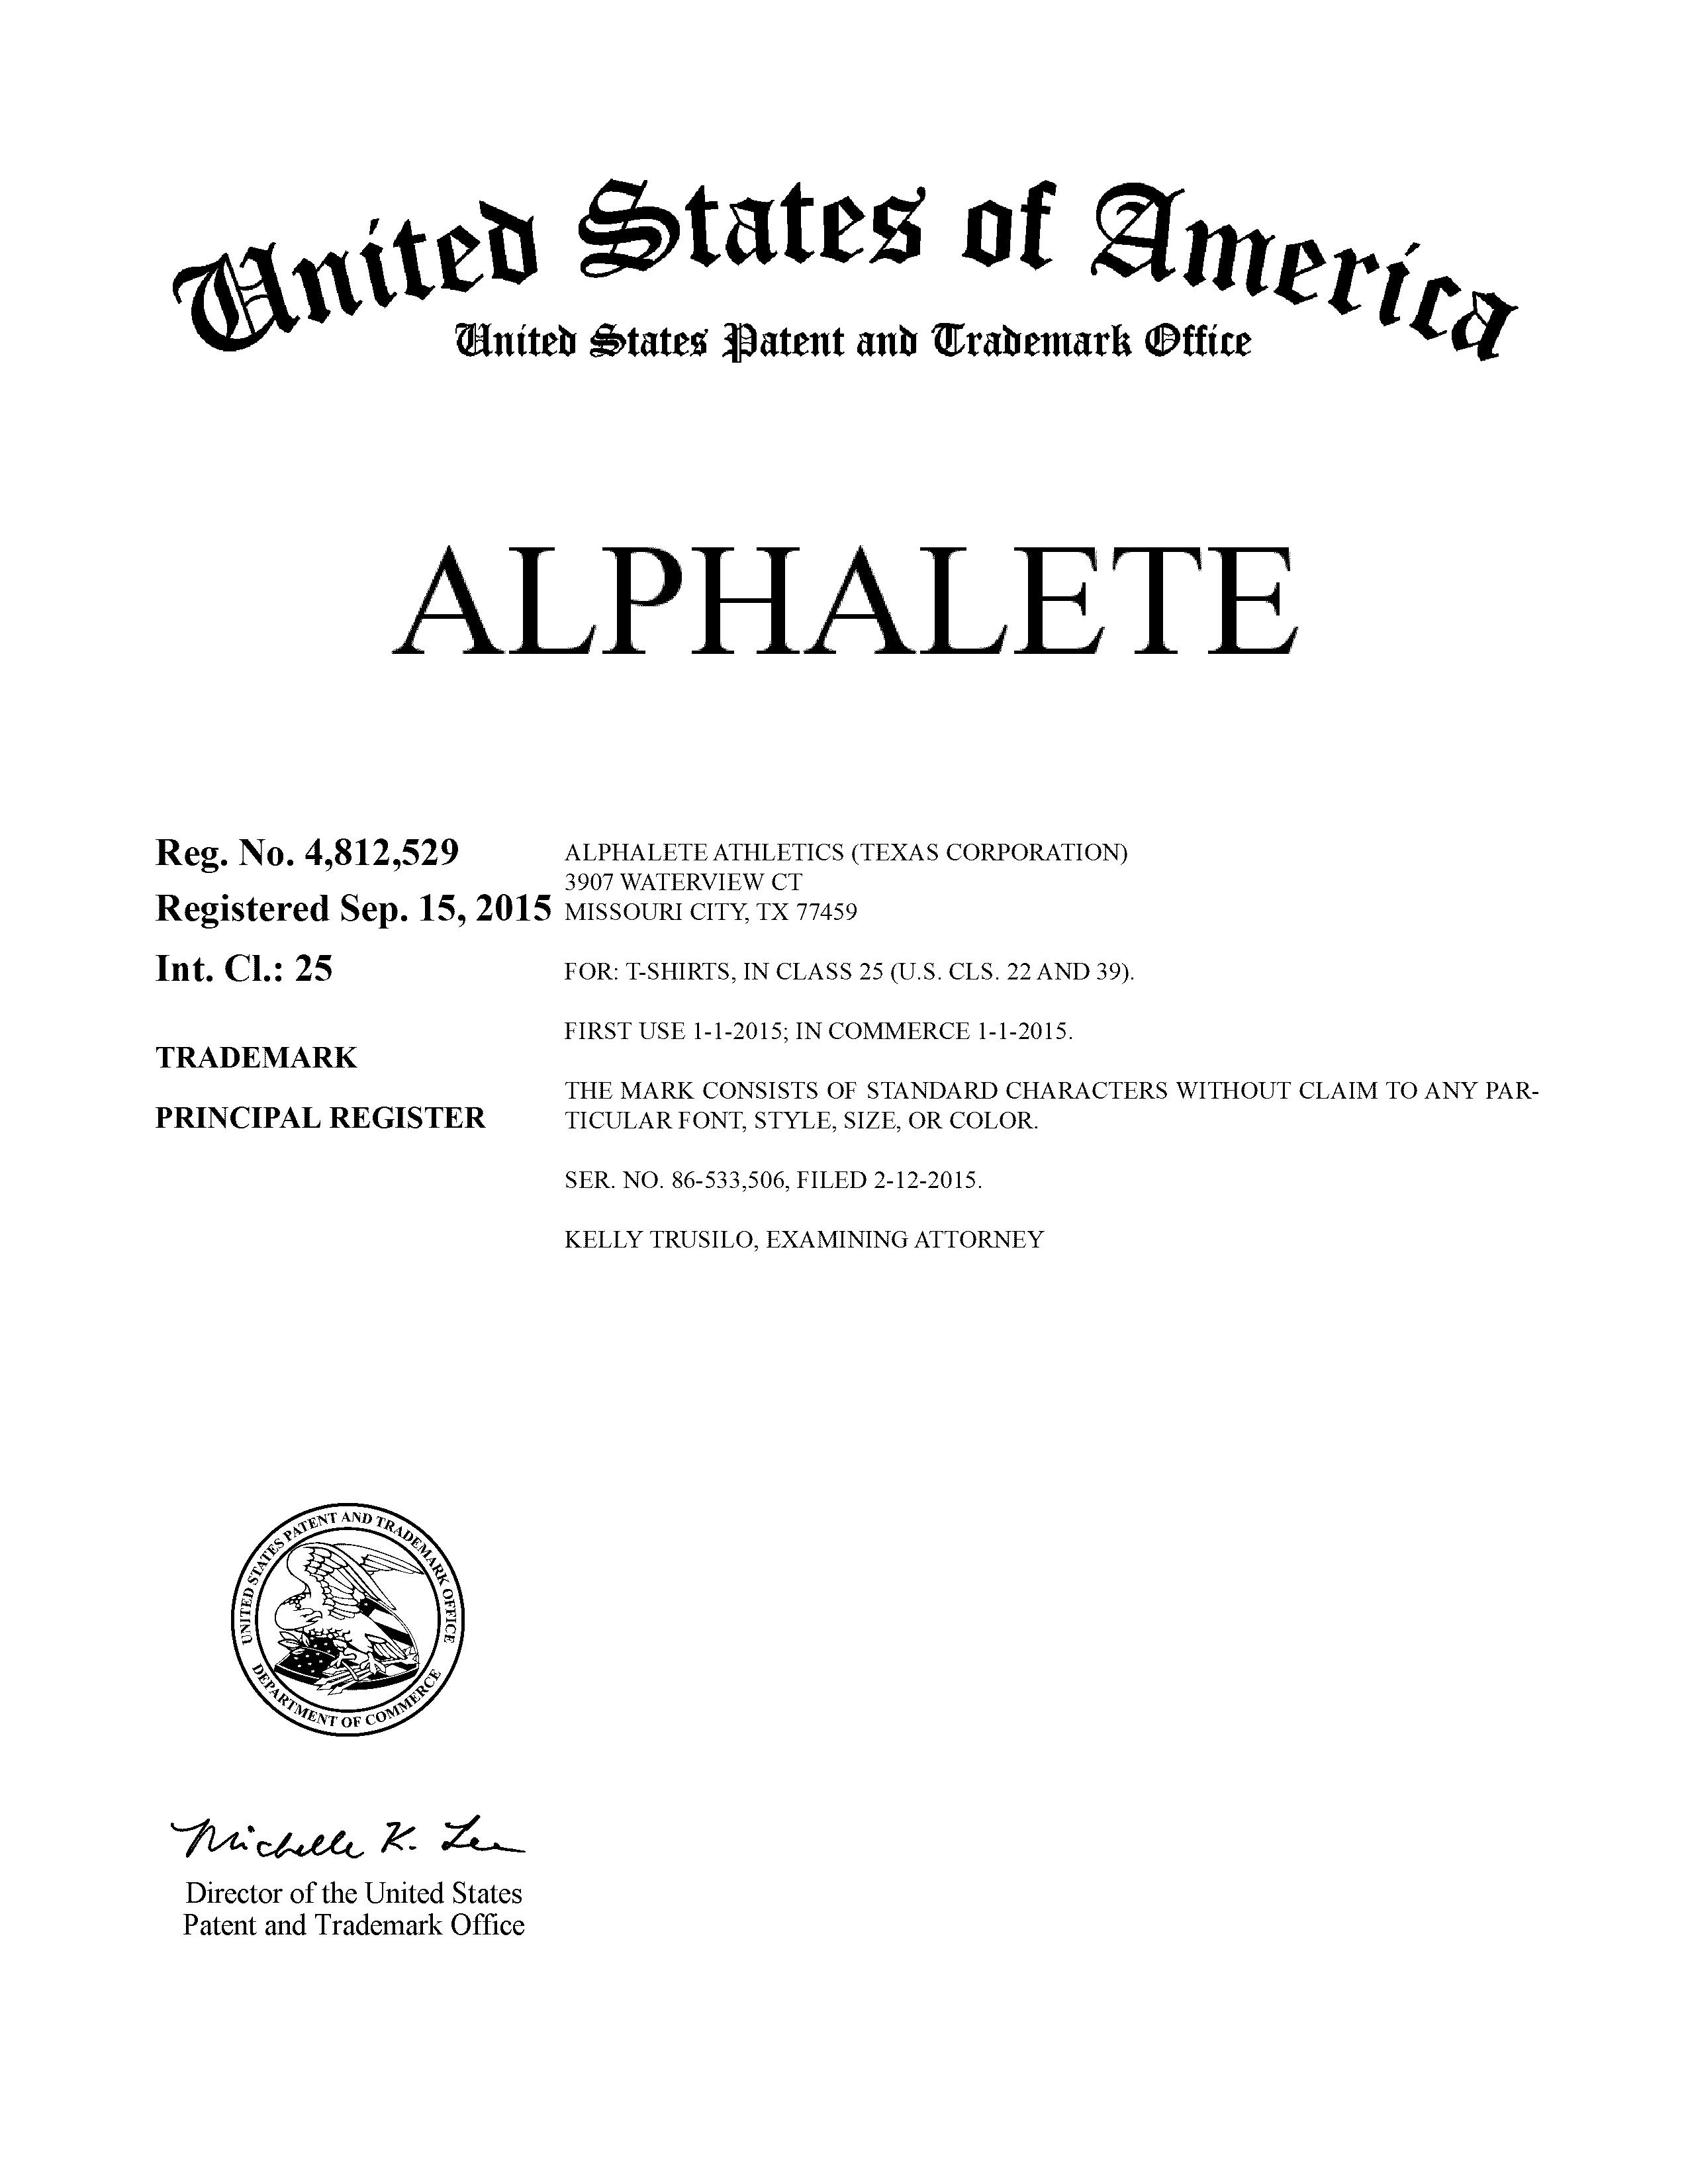 ALPHALETE ATHLETICS Trademark of Lexis IP, LLC - Registration